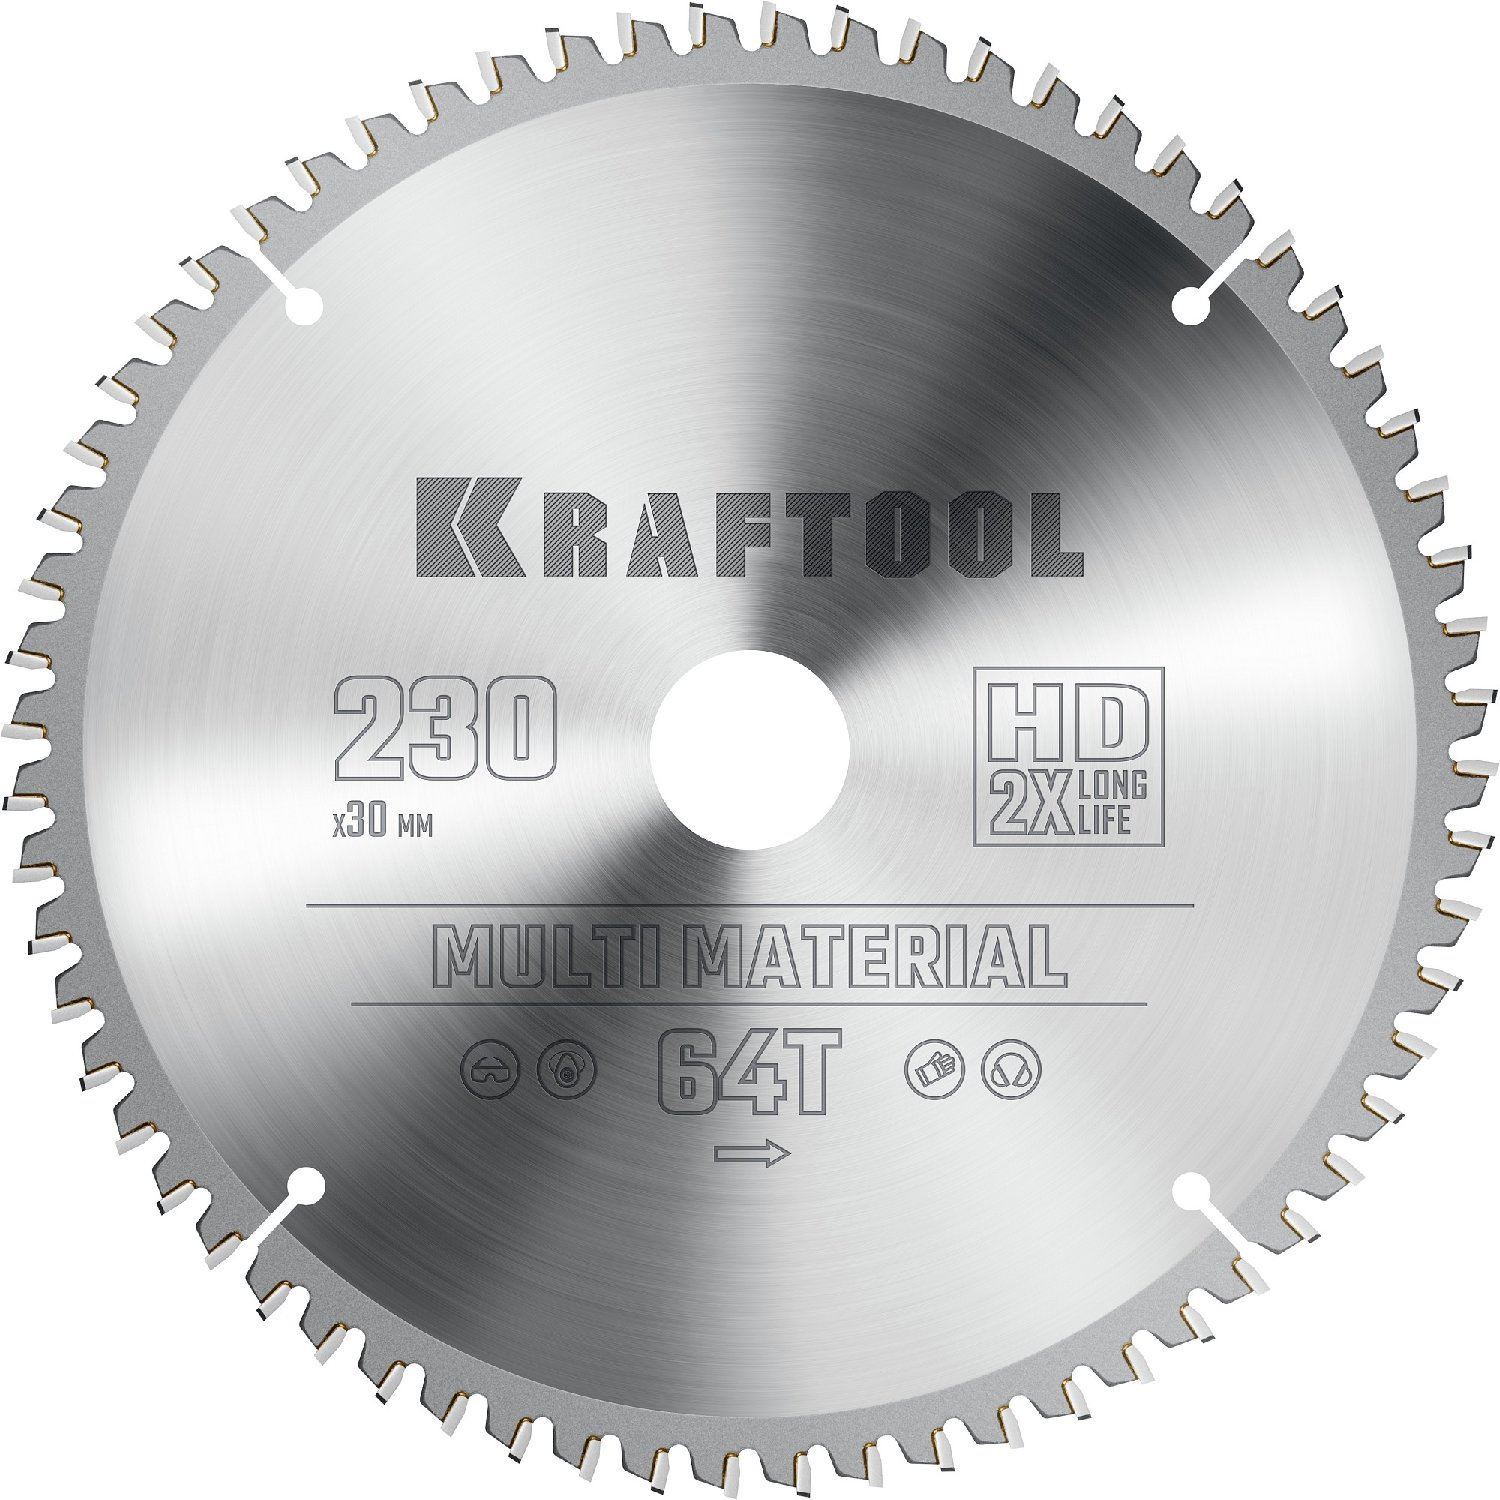 KRAFTOOL Multi Material 23030 64,     (36953-230-30)